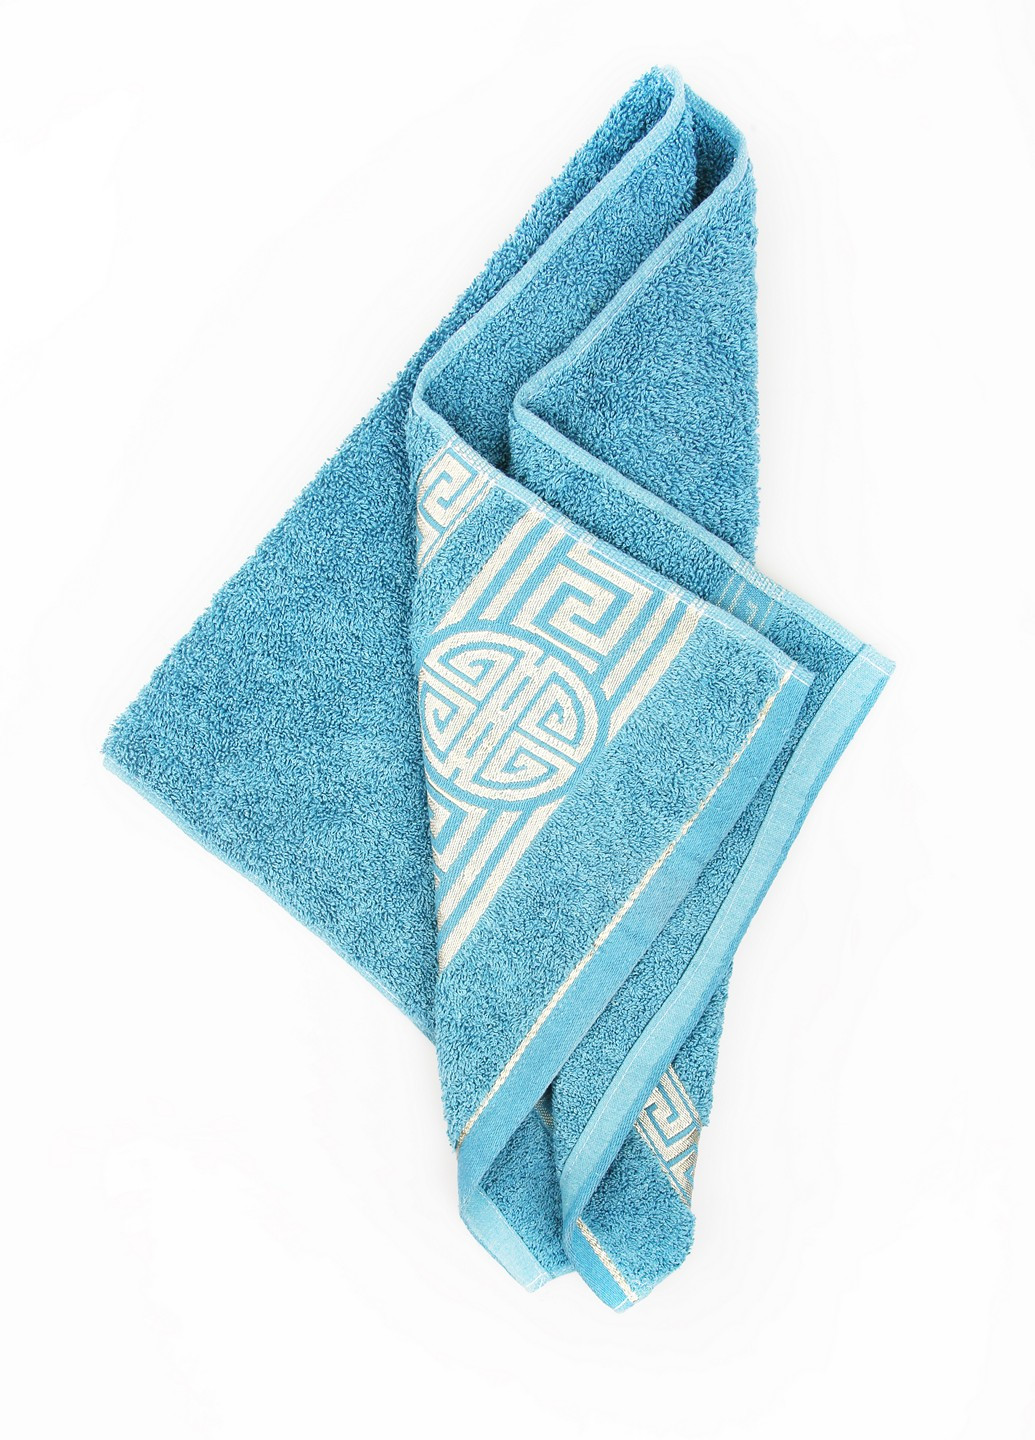 Mtp полотенце однотонный голубой производство - Китай